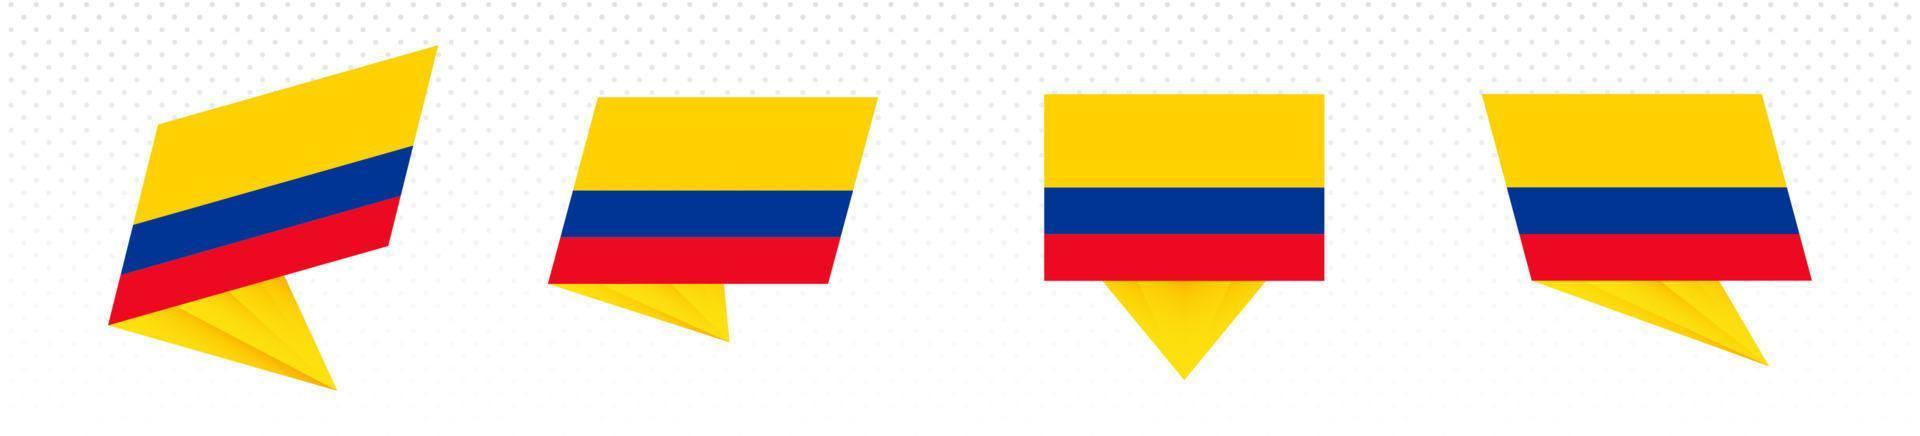 vlag van Colombia in modern abstract ontwerp, vlag set. vector